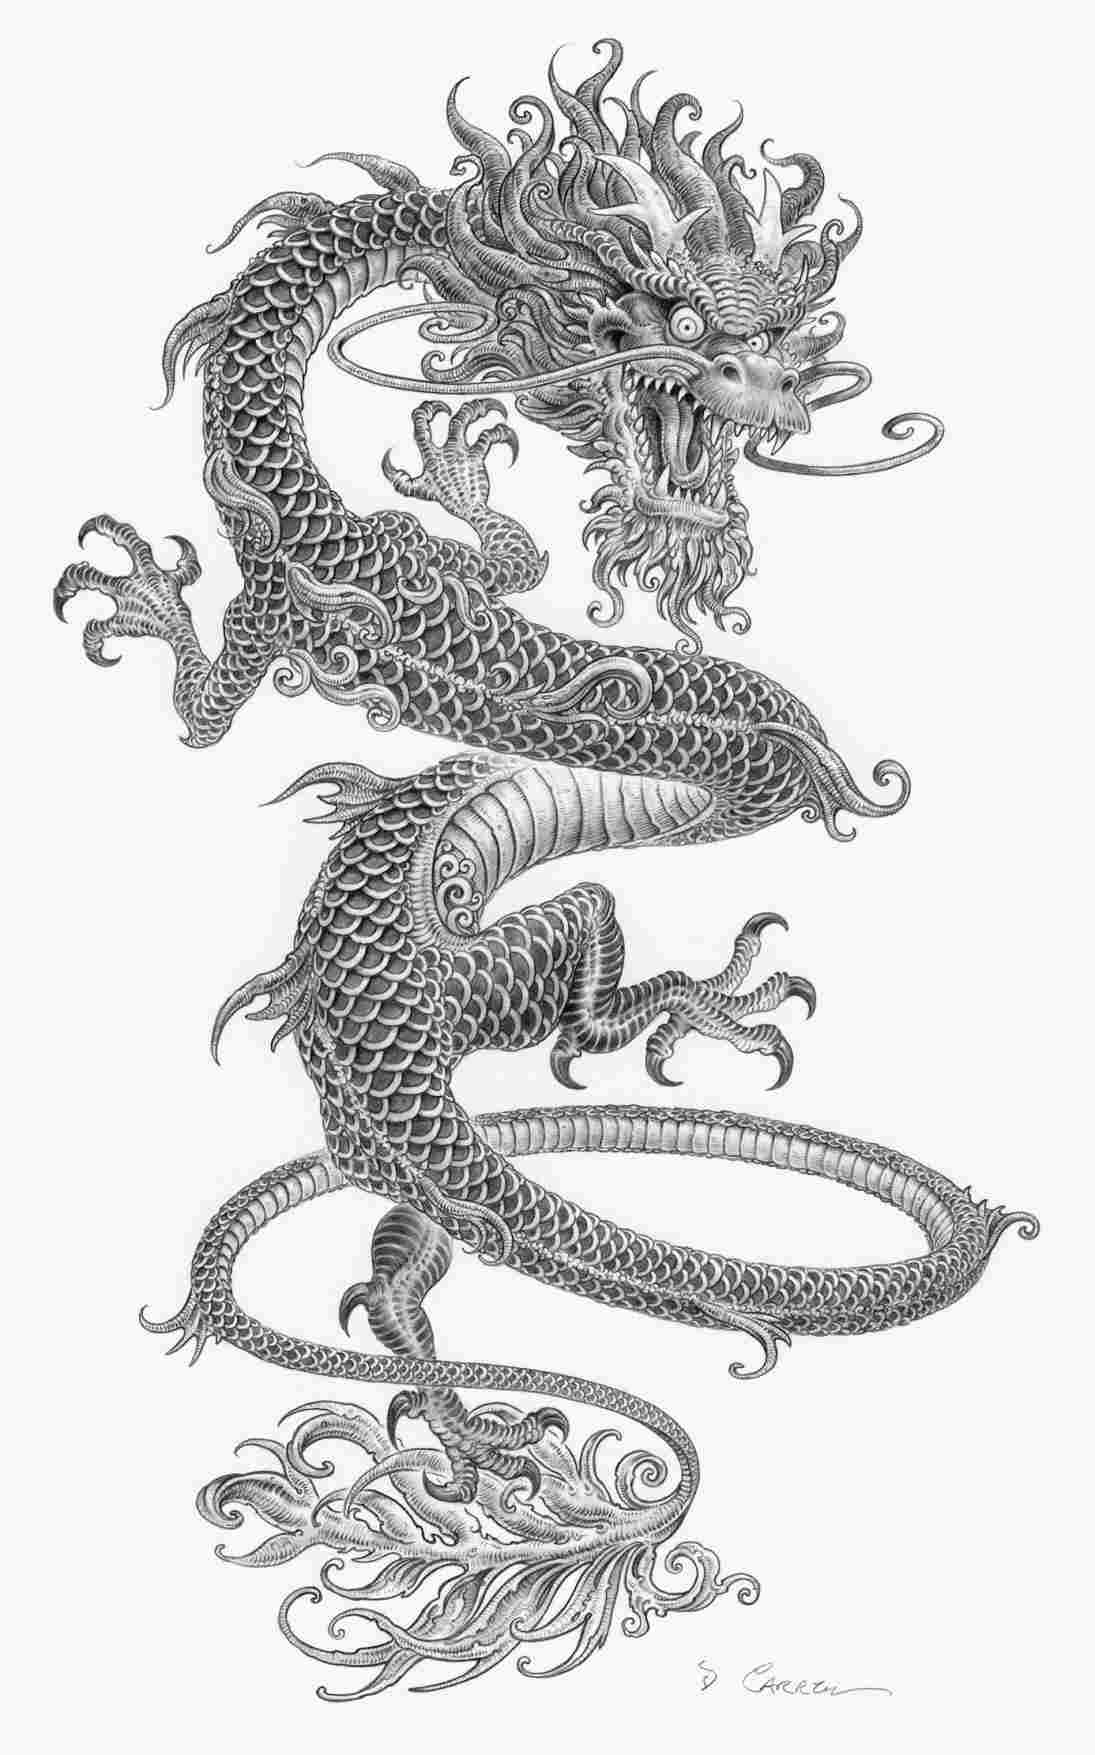 Chinese Dragon Pencil Drawings at PaintingValley